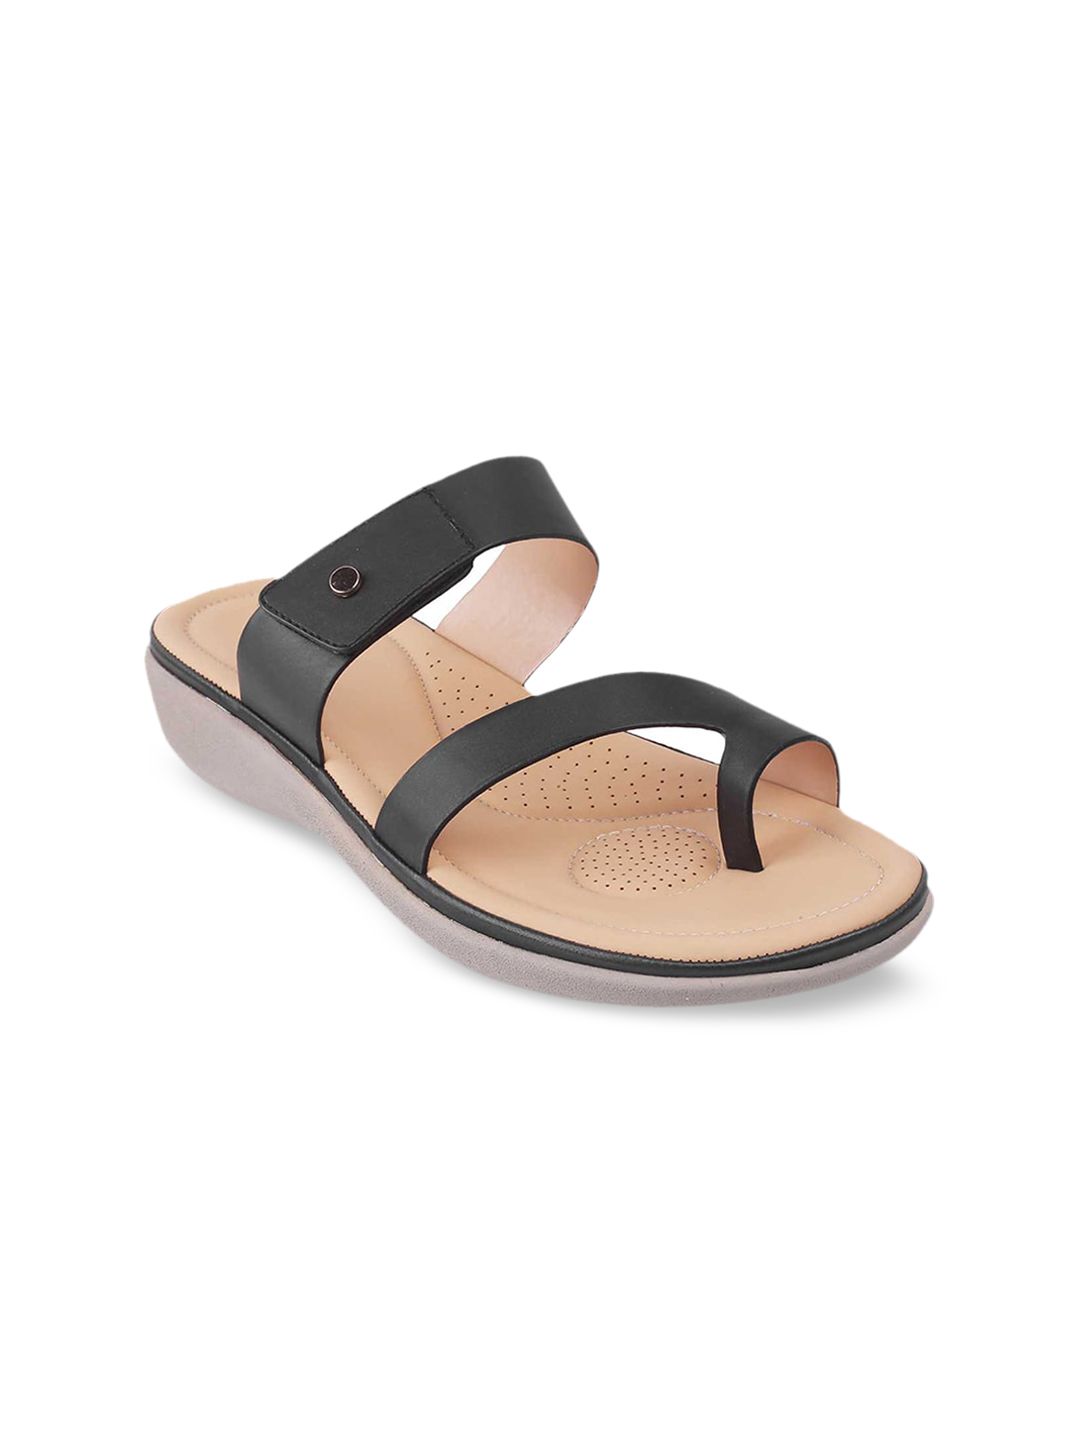 Mochi Black & Beige Comfort Sandals Price in India